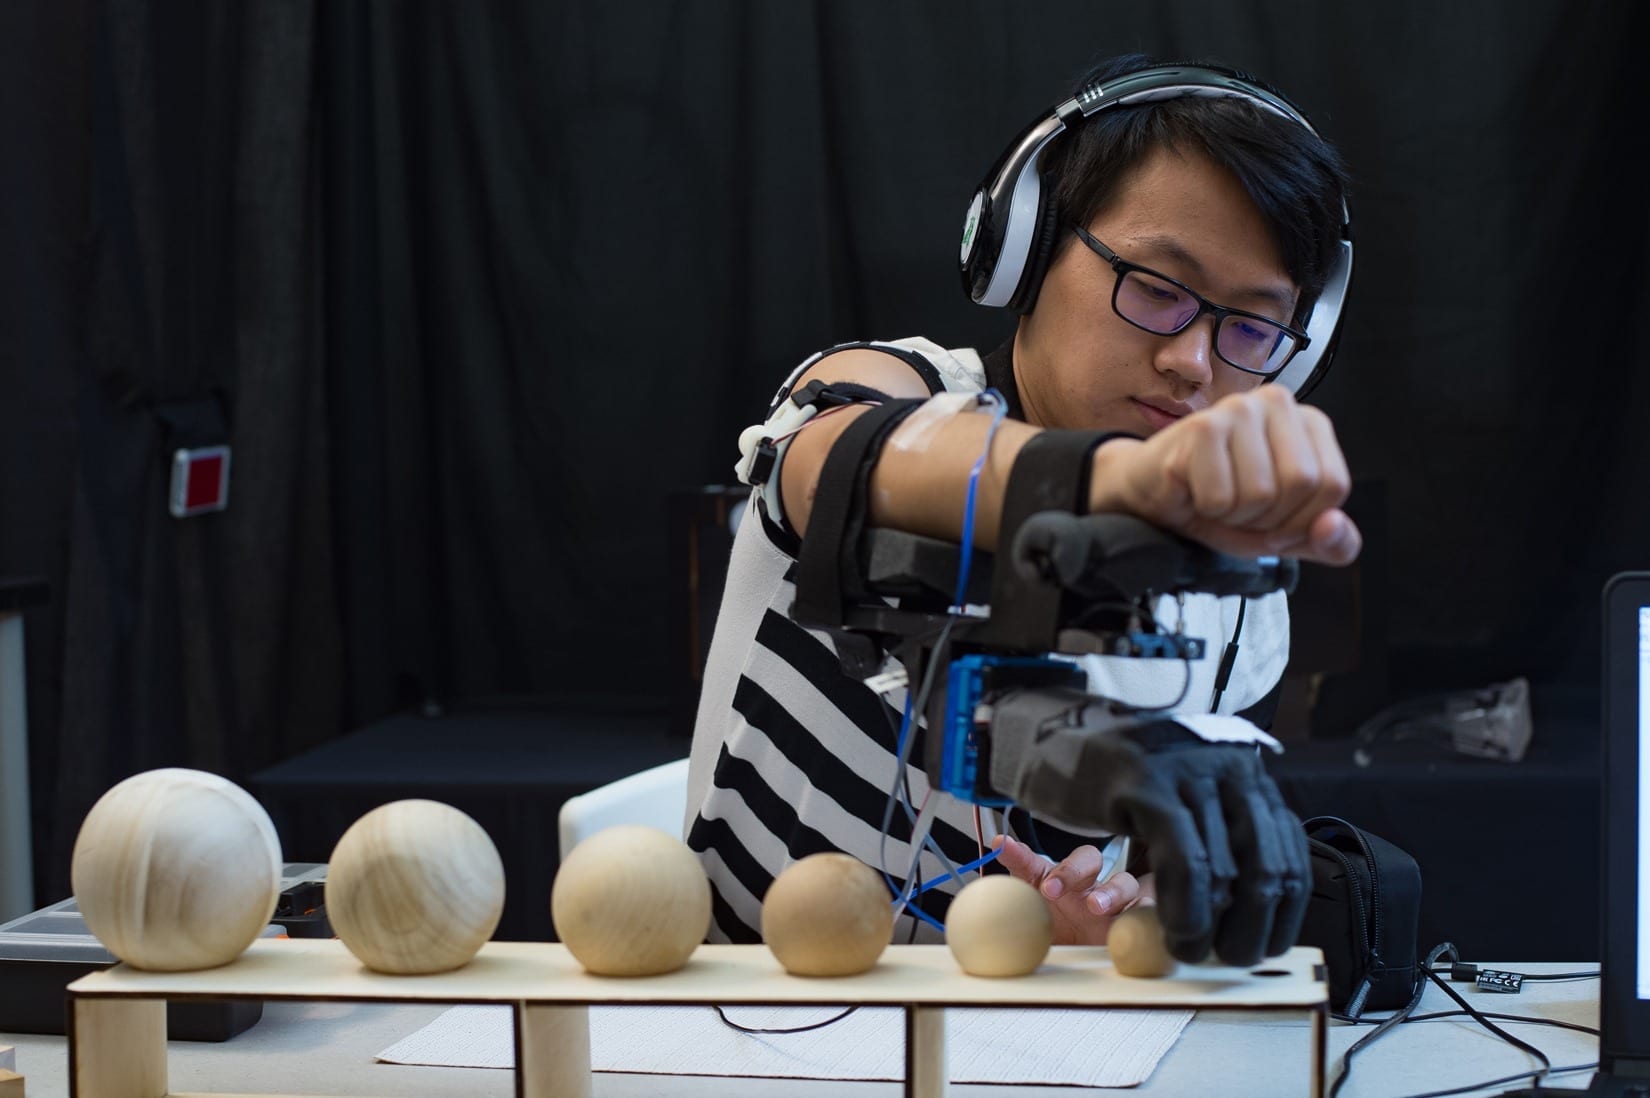 Tactile feedback adds ‘muscle sense’ to prosthetic hand